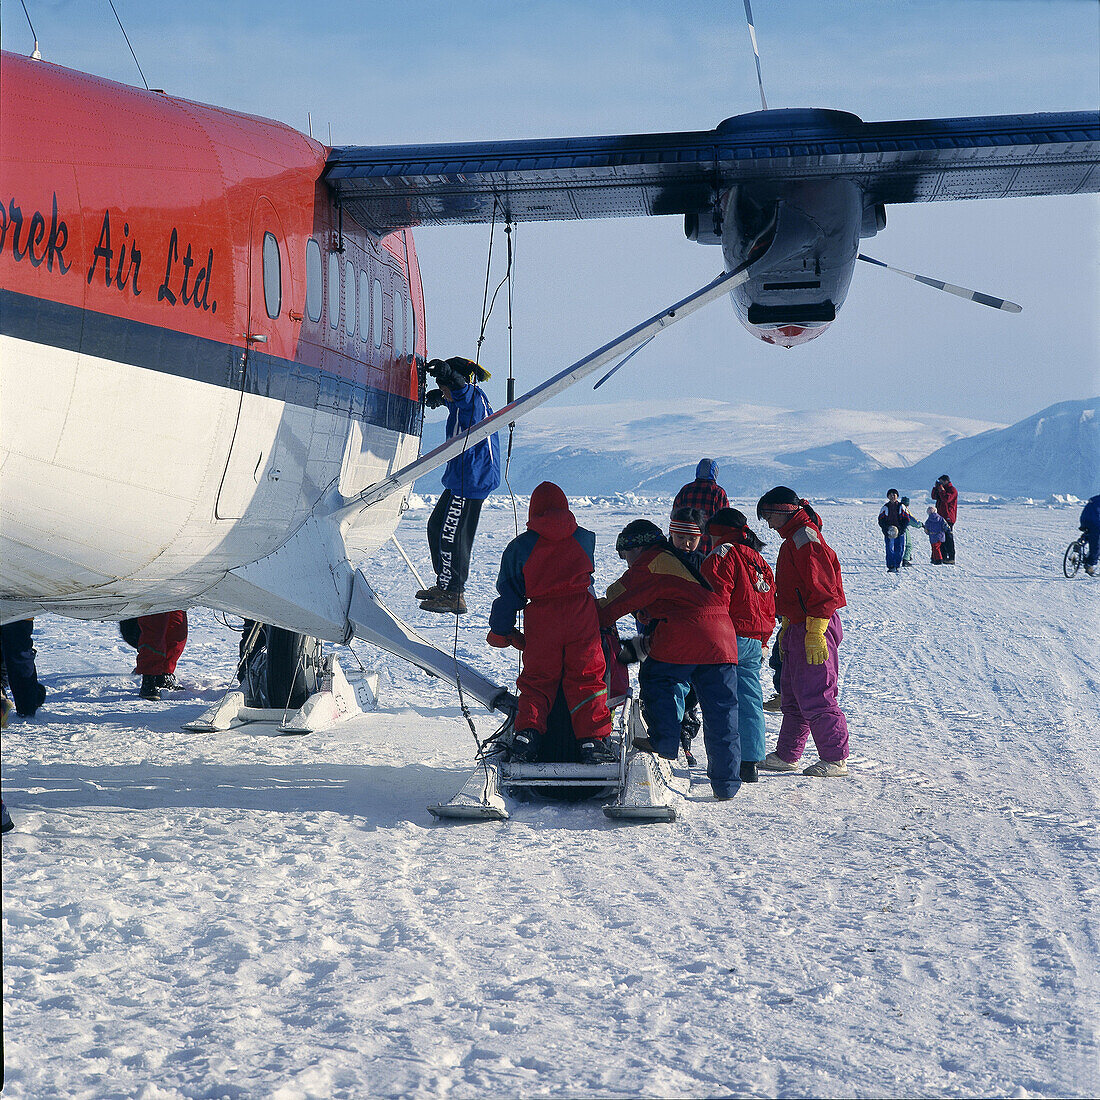 Landing on Thule. Greenland